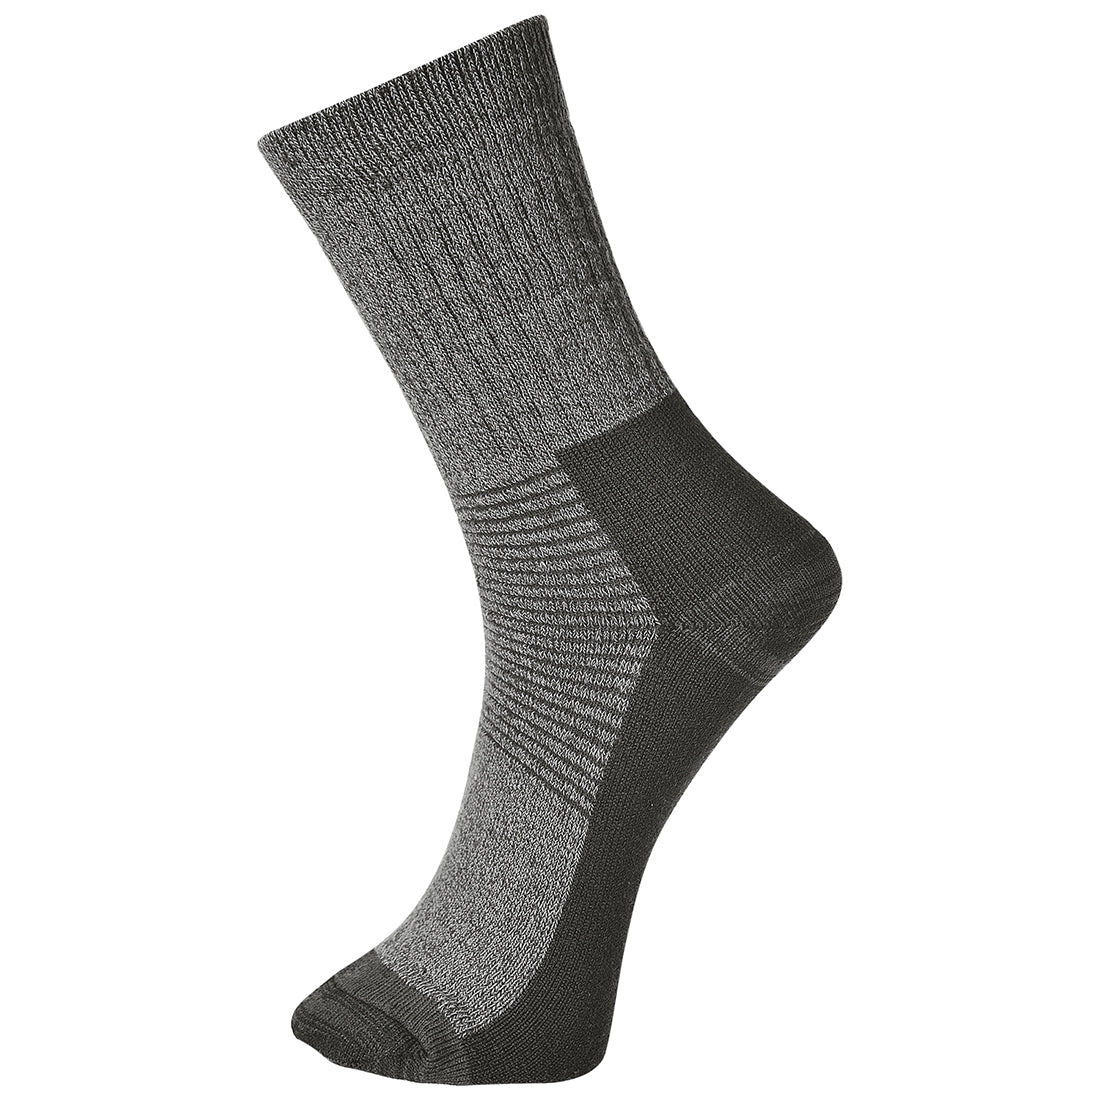 Thermal Sock Black and grey - SK11